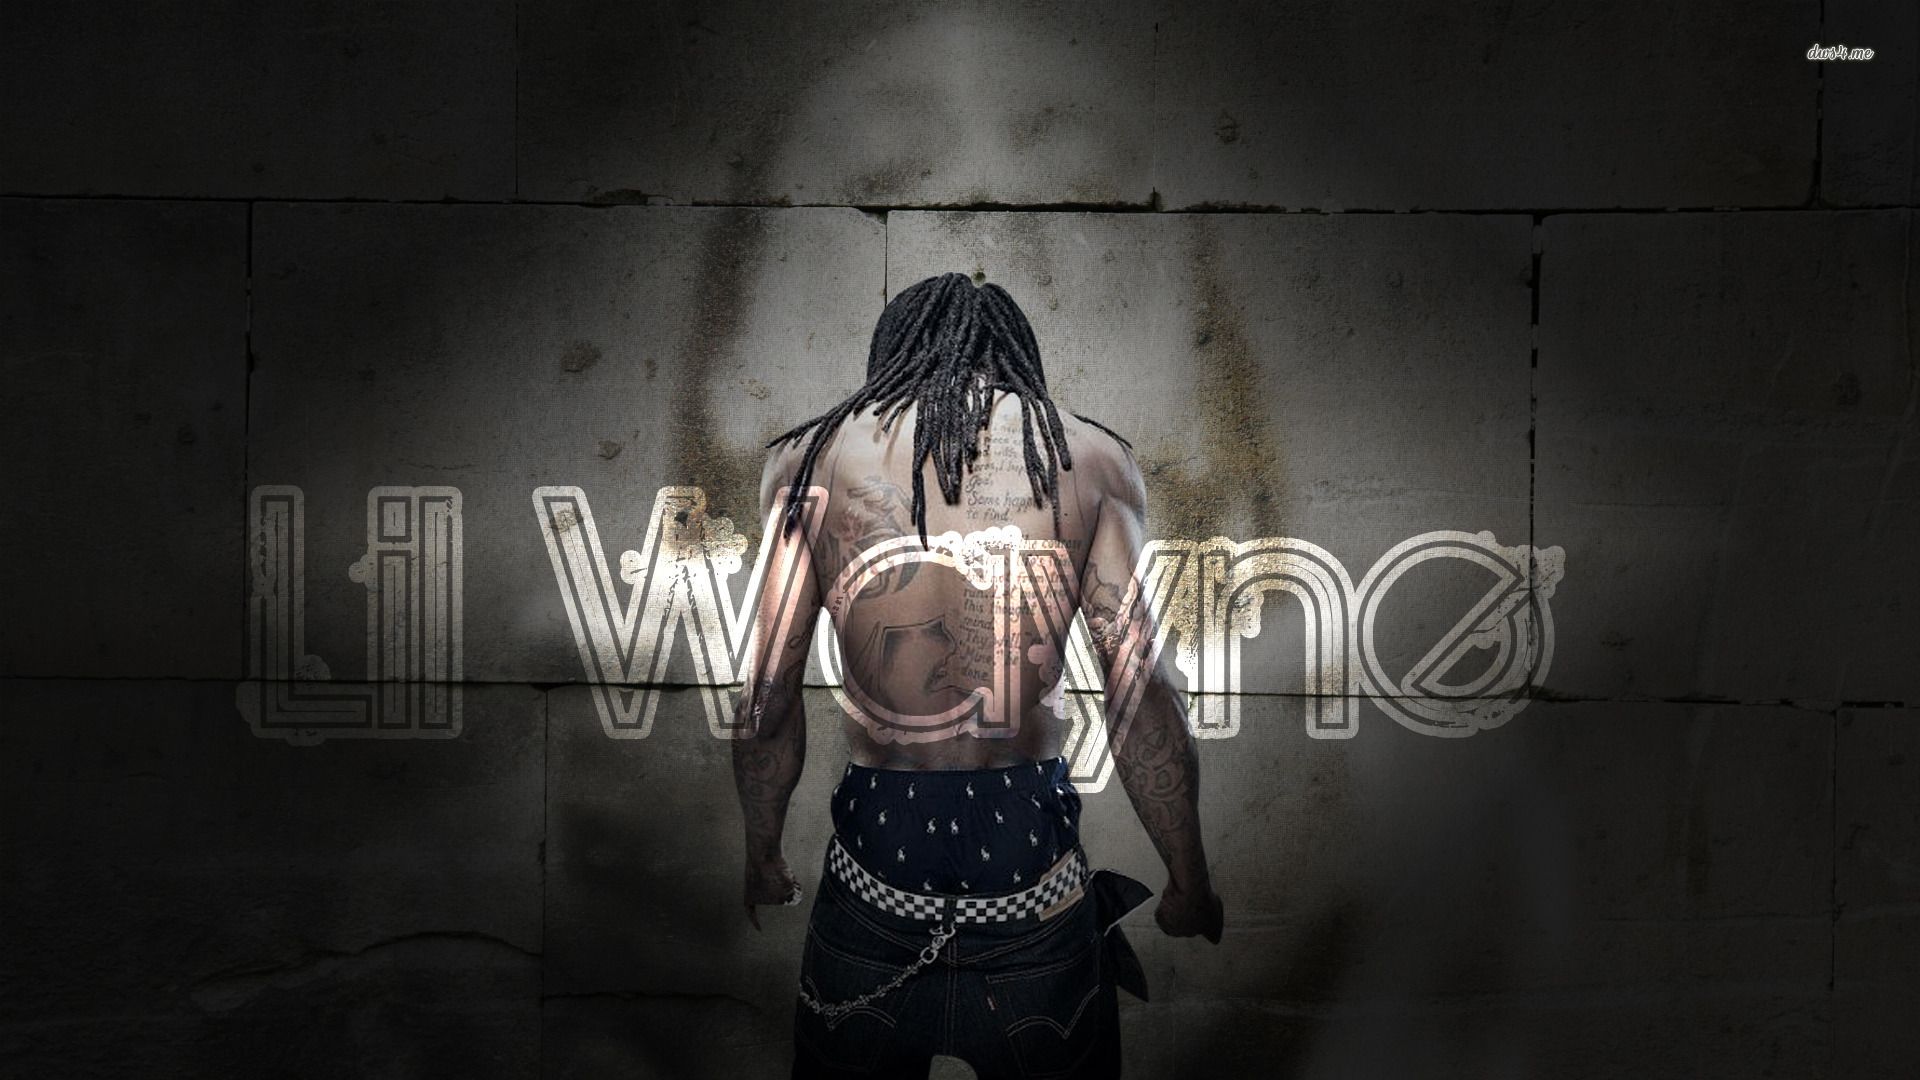 Lil Wayne wallpaper - Music wallpapers